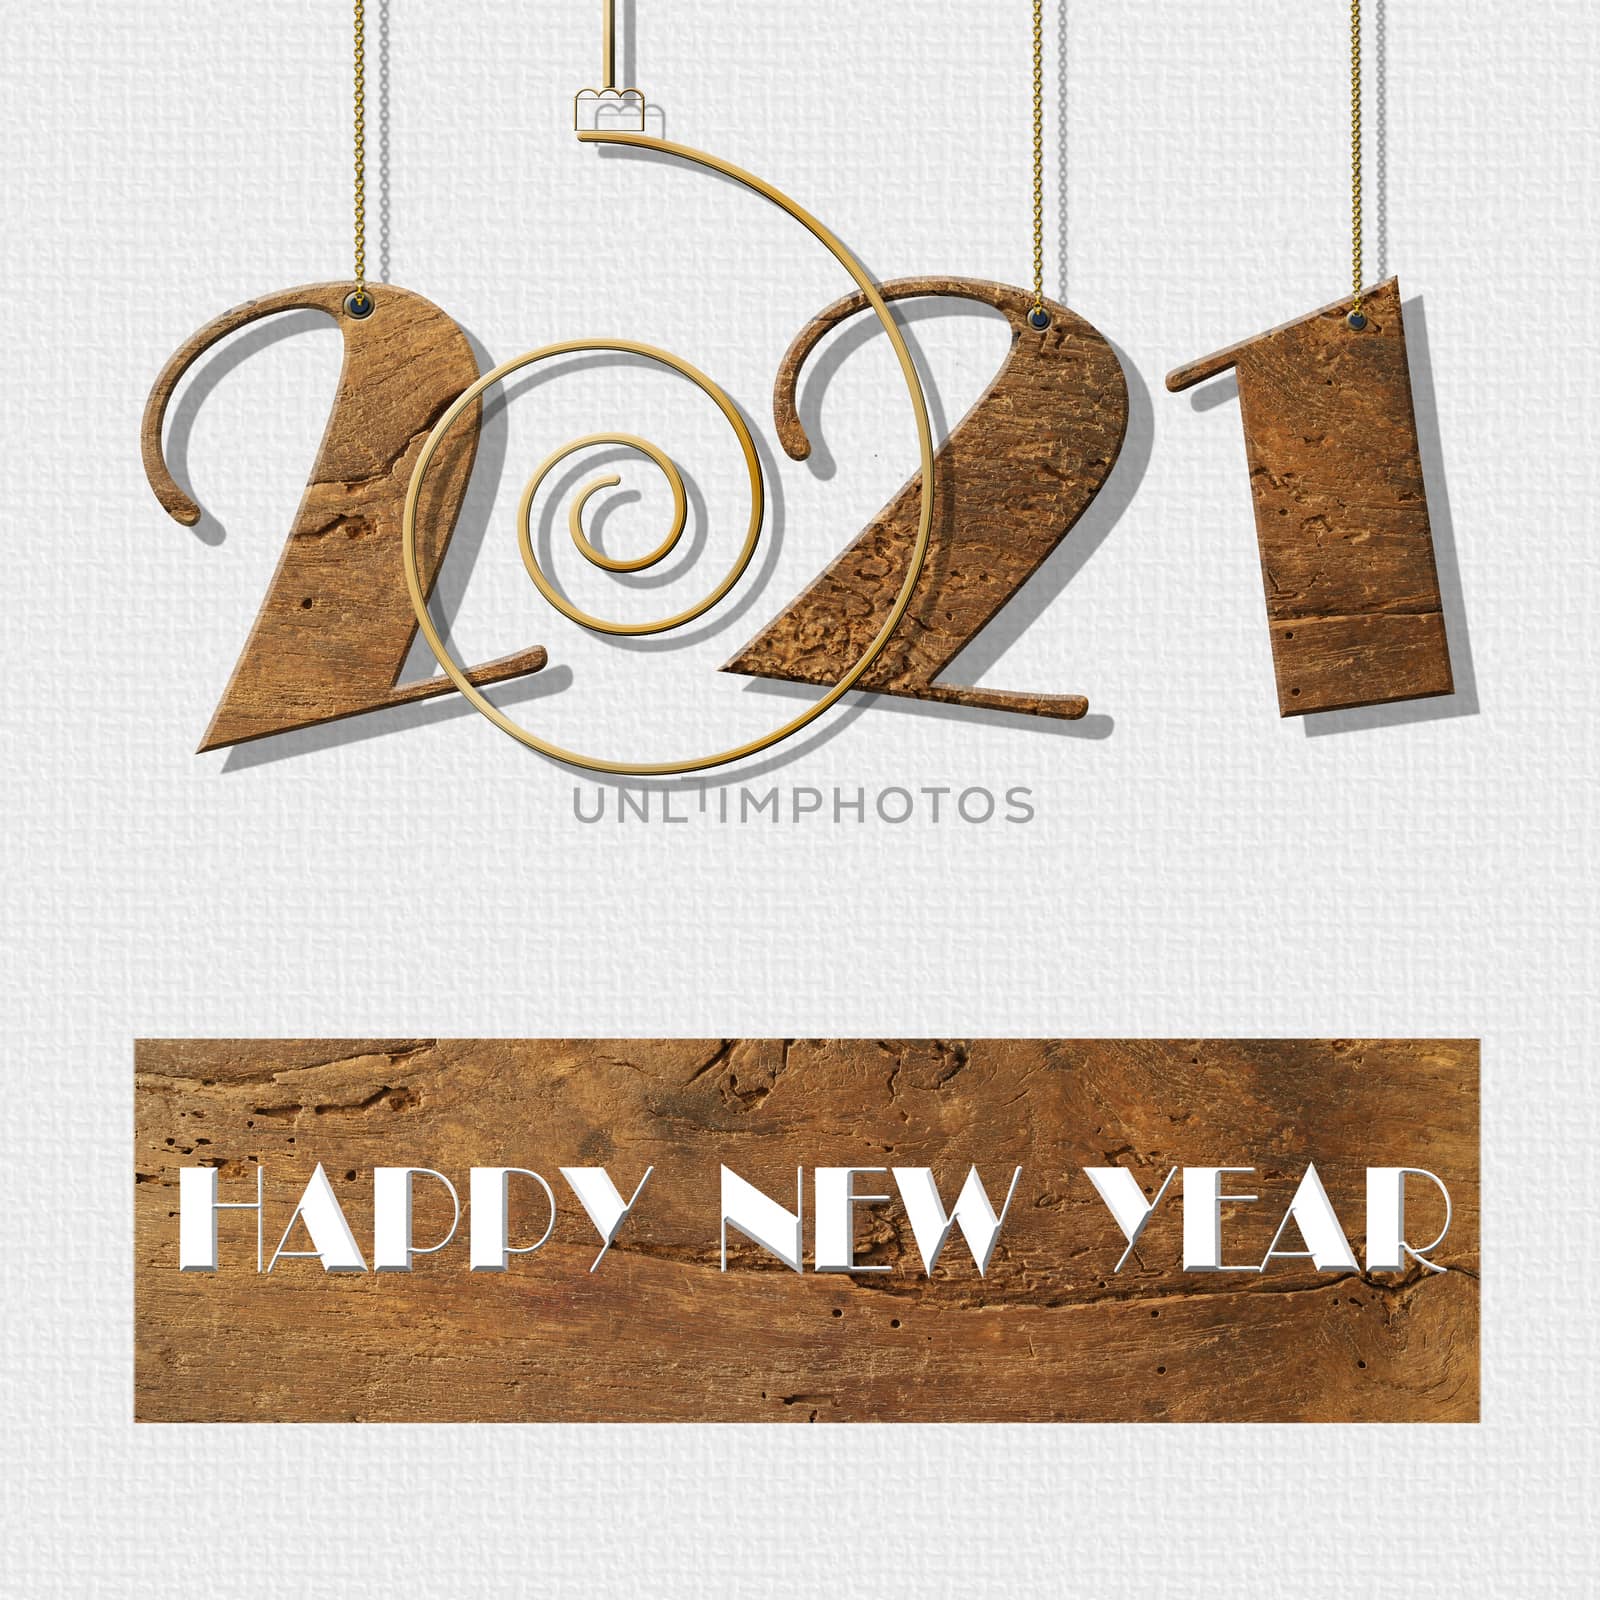 2021 New Year card in wooden design by NelliPolk